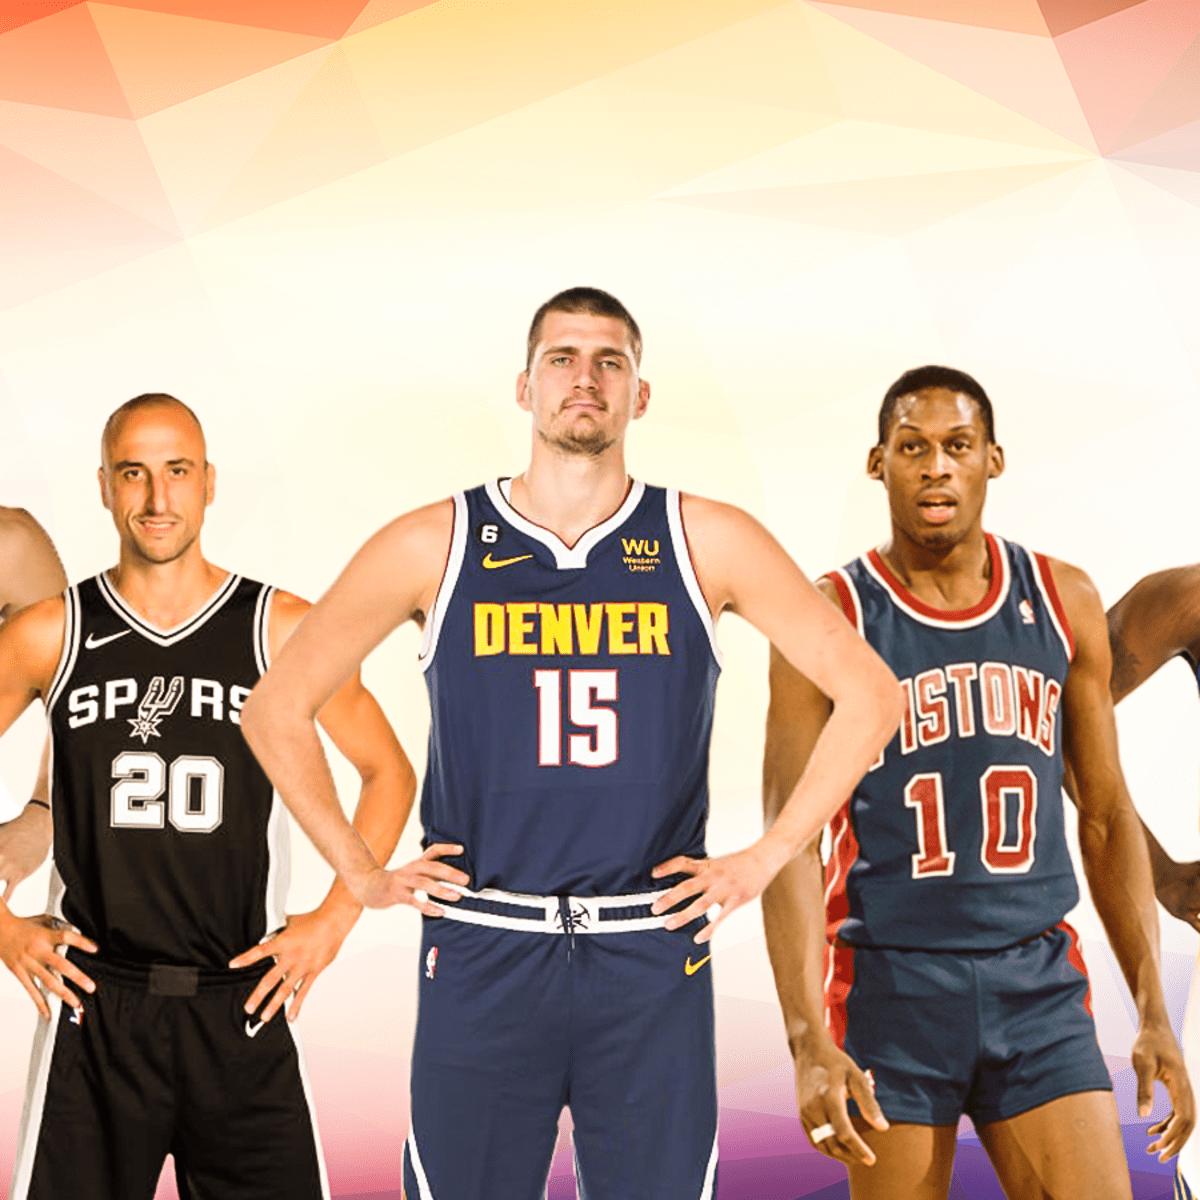 NBA - Who are your round 2 sleepers? #NBADraft